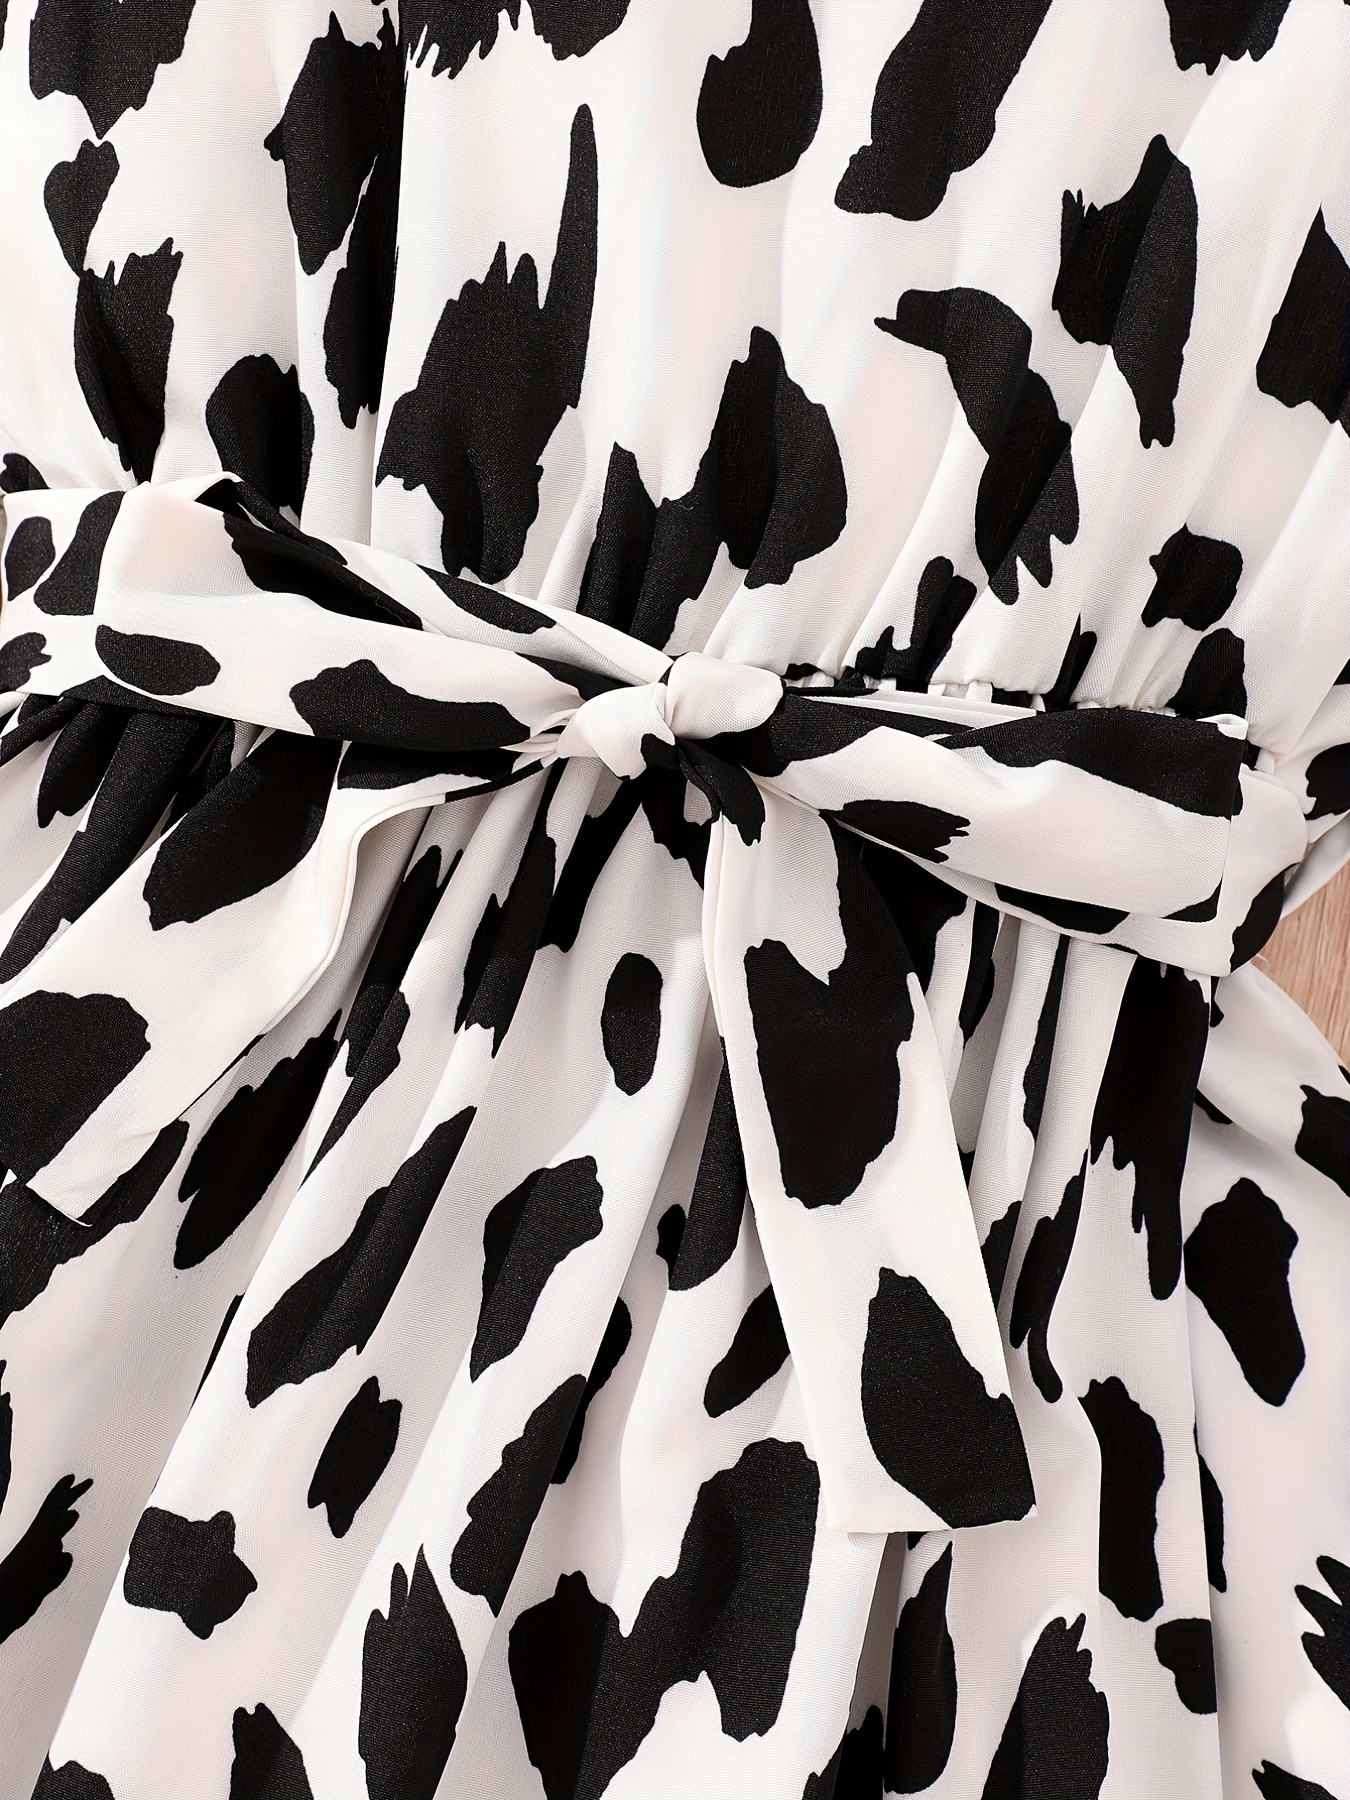 Monochrome Zebra Print Long Sleeve Shirt Dress